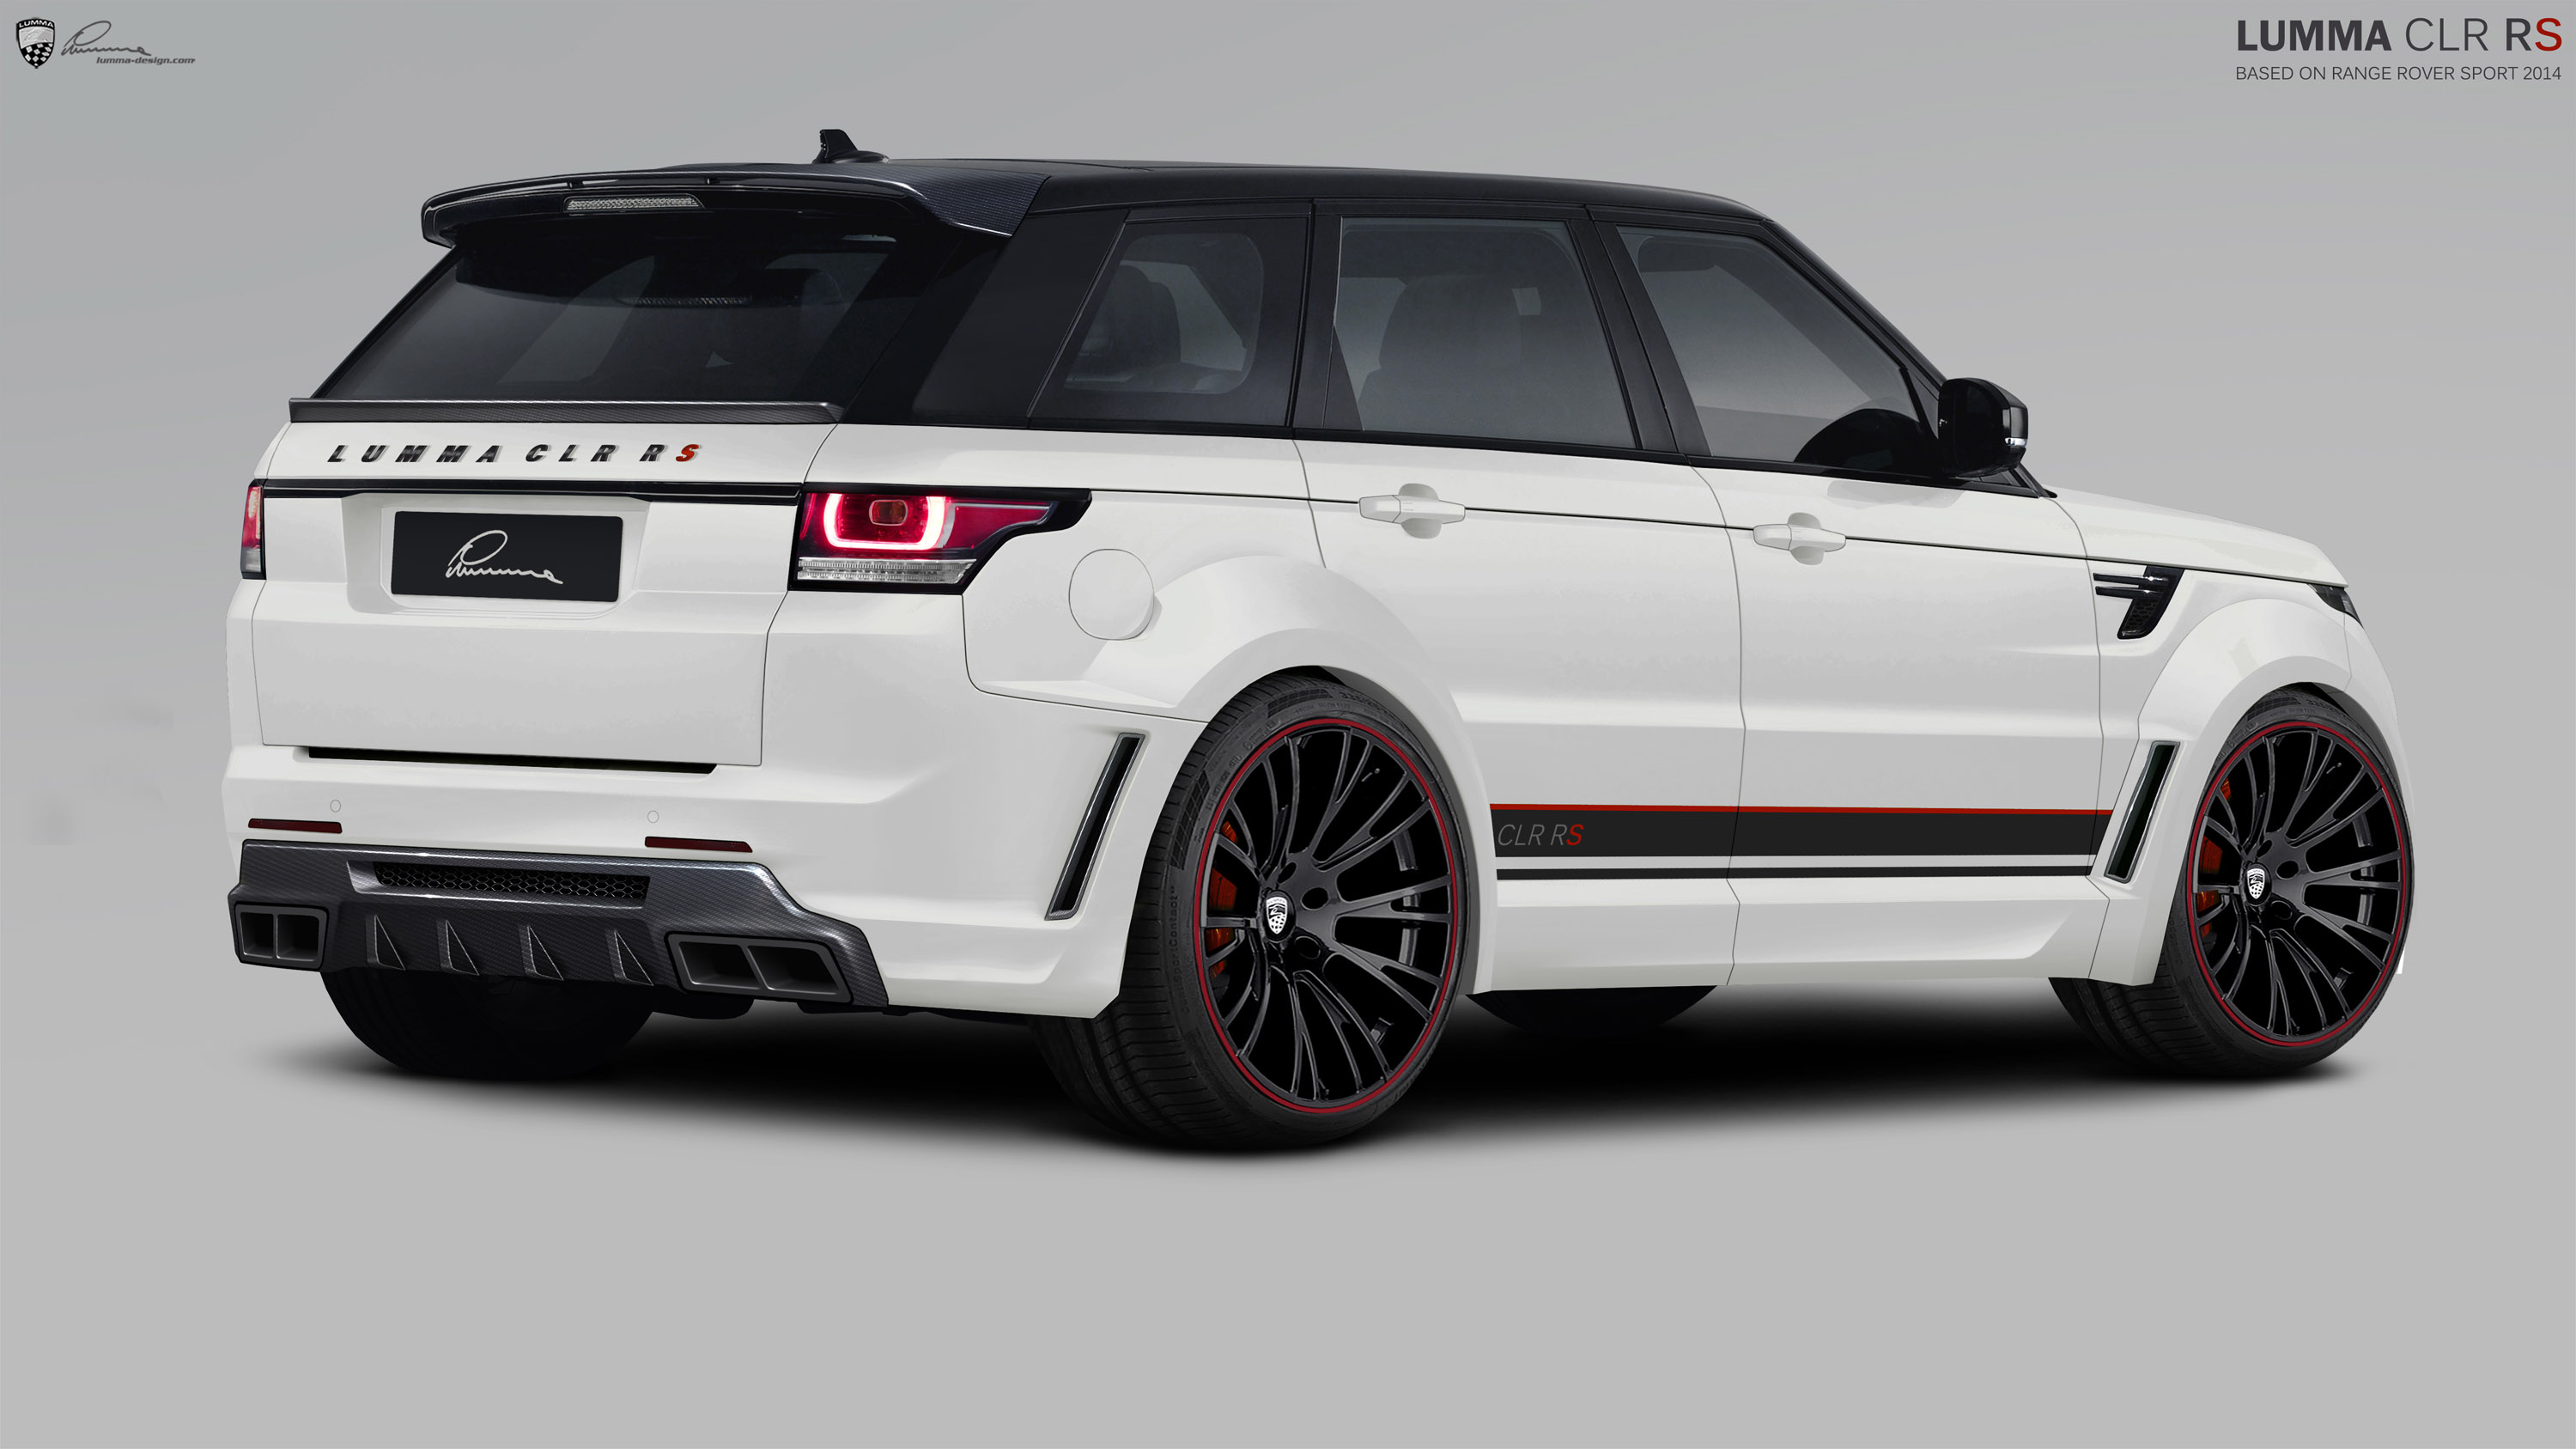 LUMMA Design Range Rover Sport CLR RS